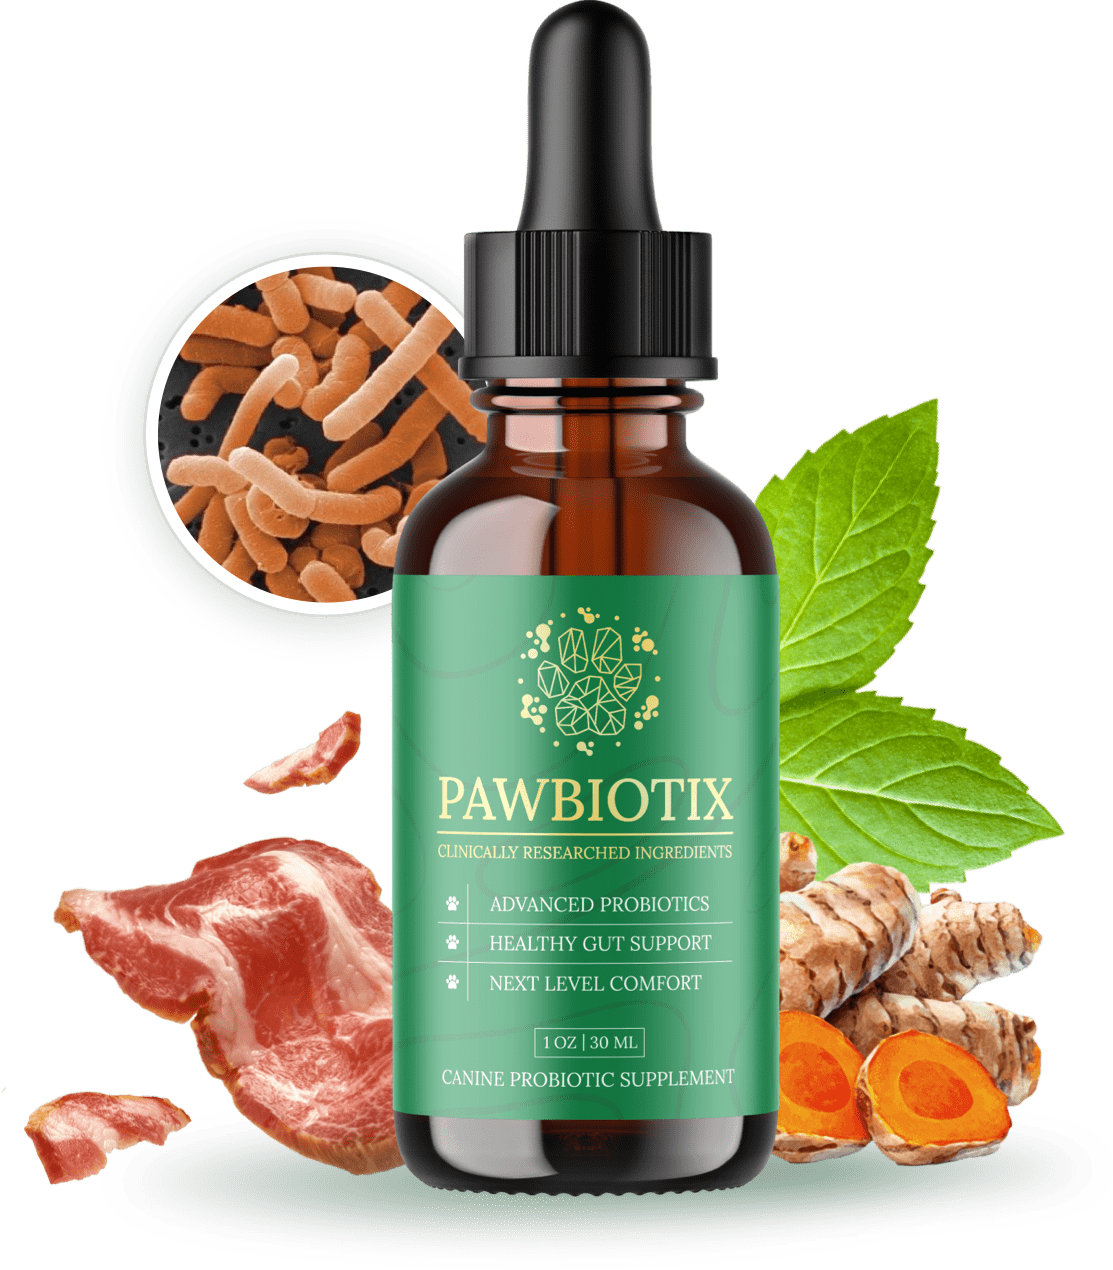 Pawbiotix Best Weight Loss Supplement